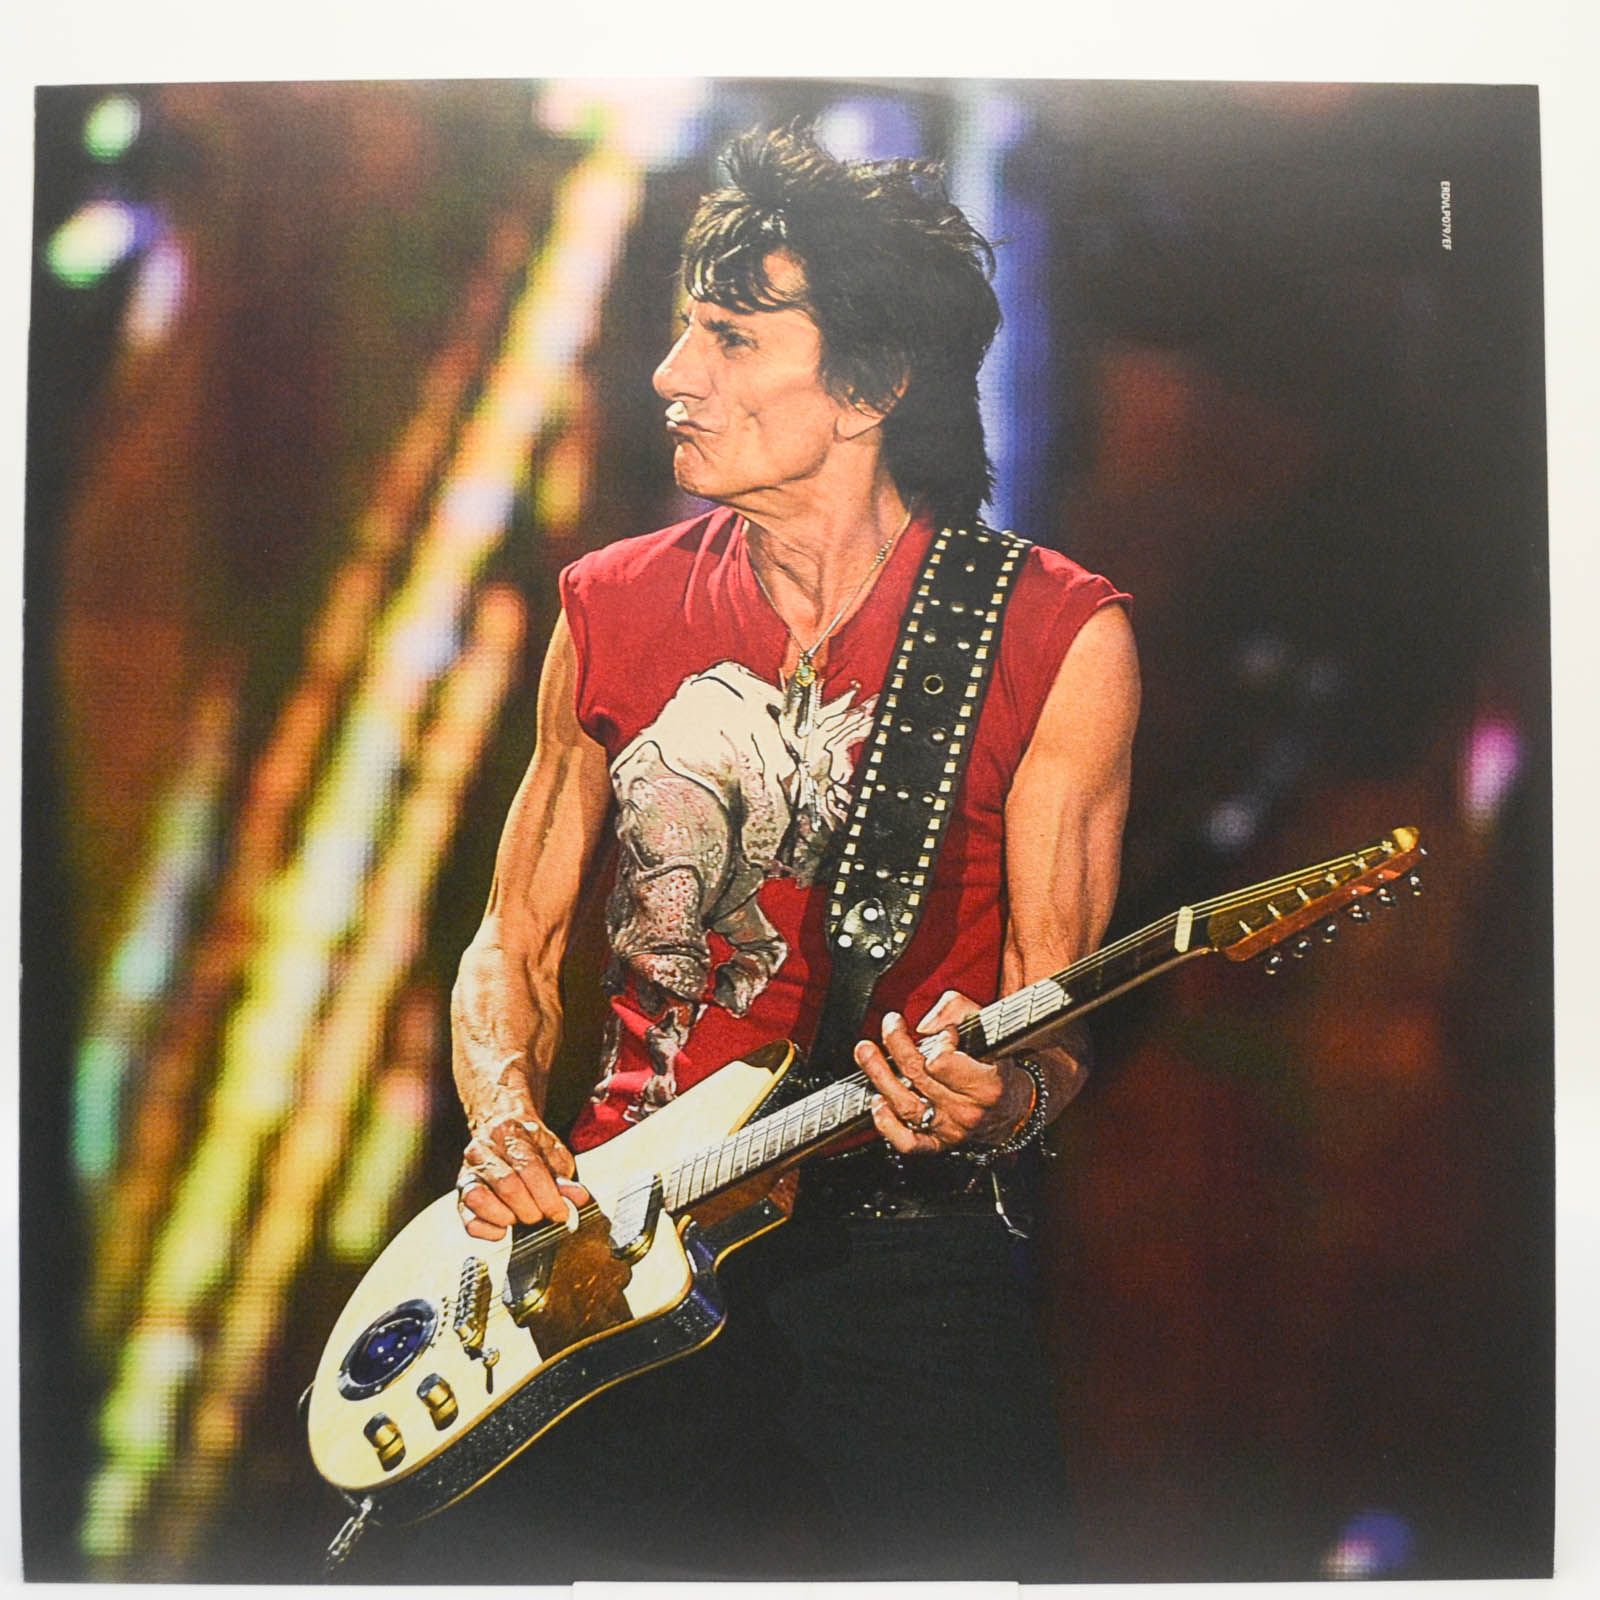 Rolling Stones — Sweet Summer Sun - Hyde Park Live (3LP+DVD), 2013